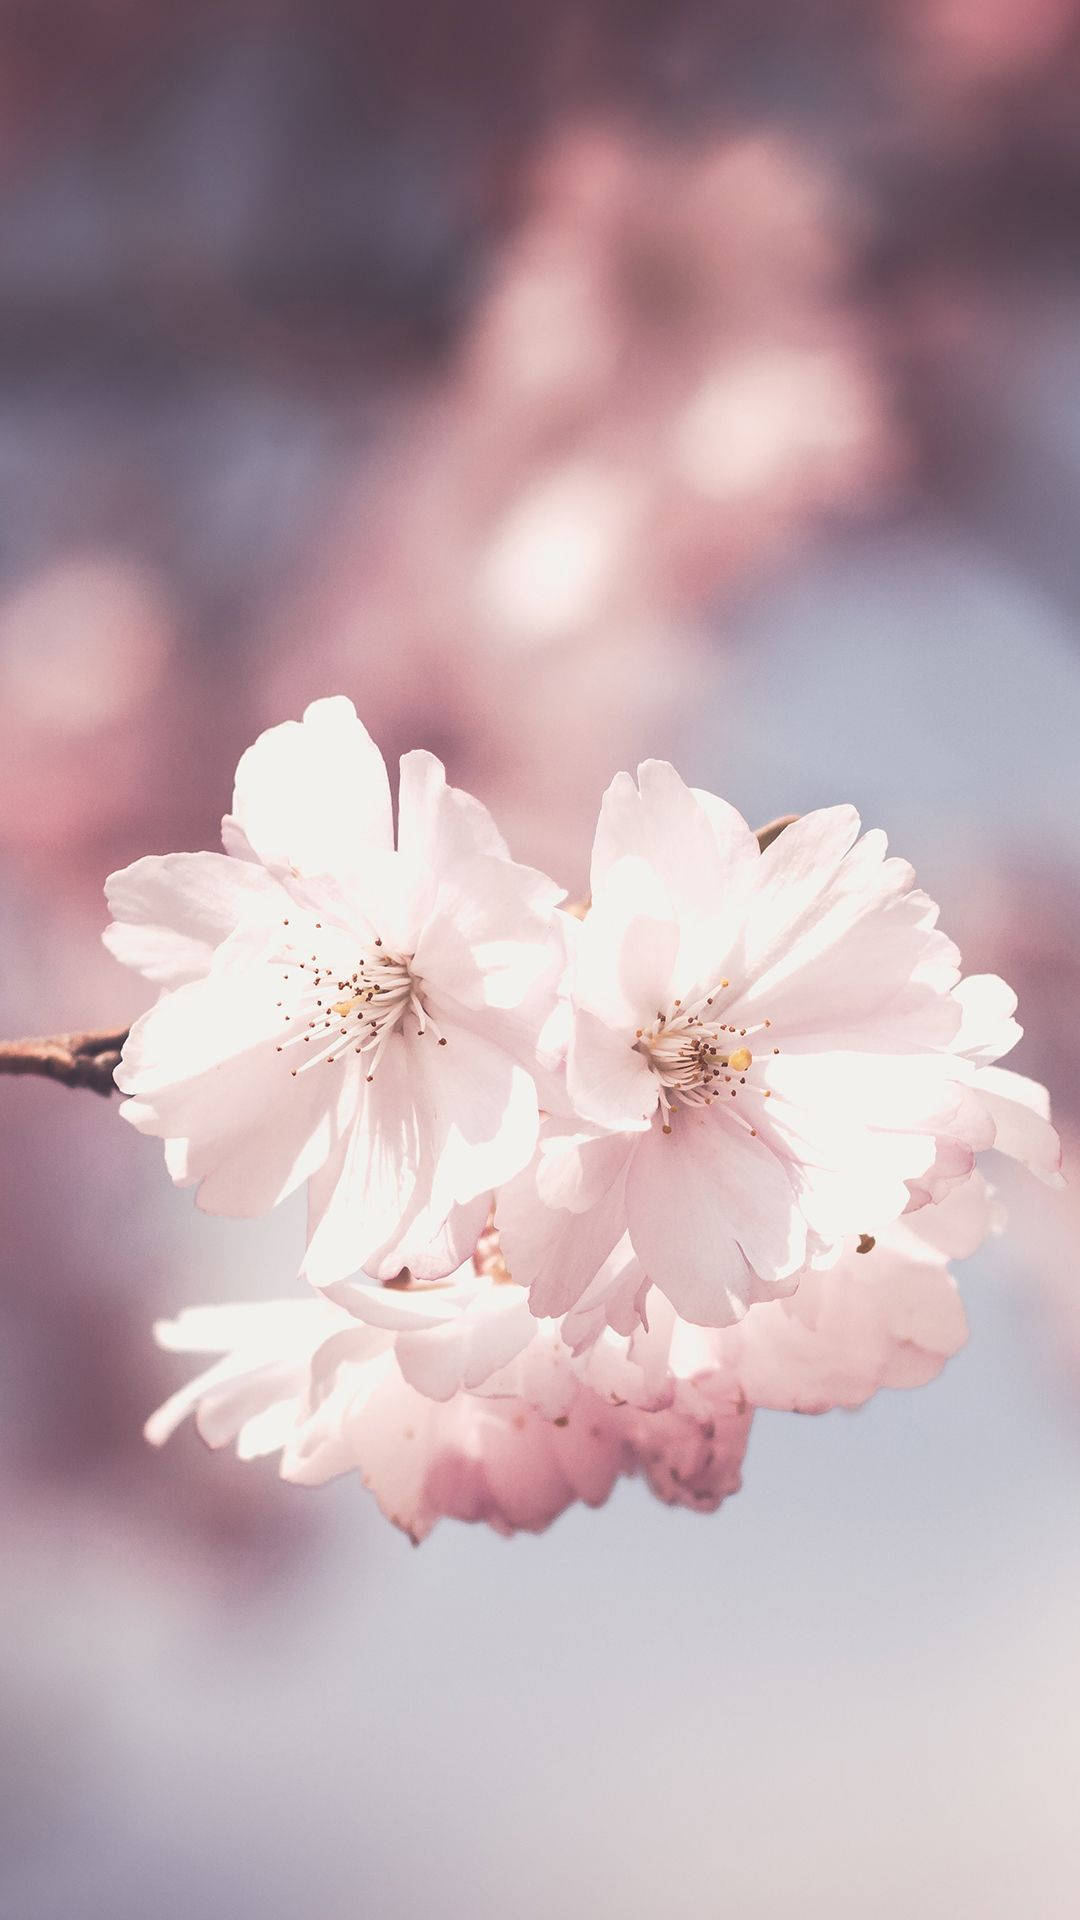 Cute Pink Flower Blurred